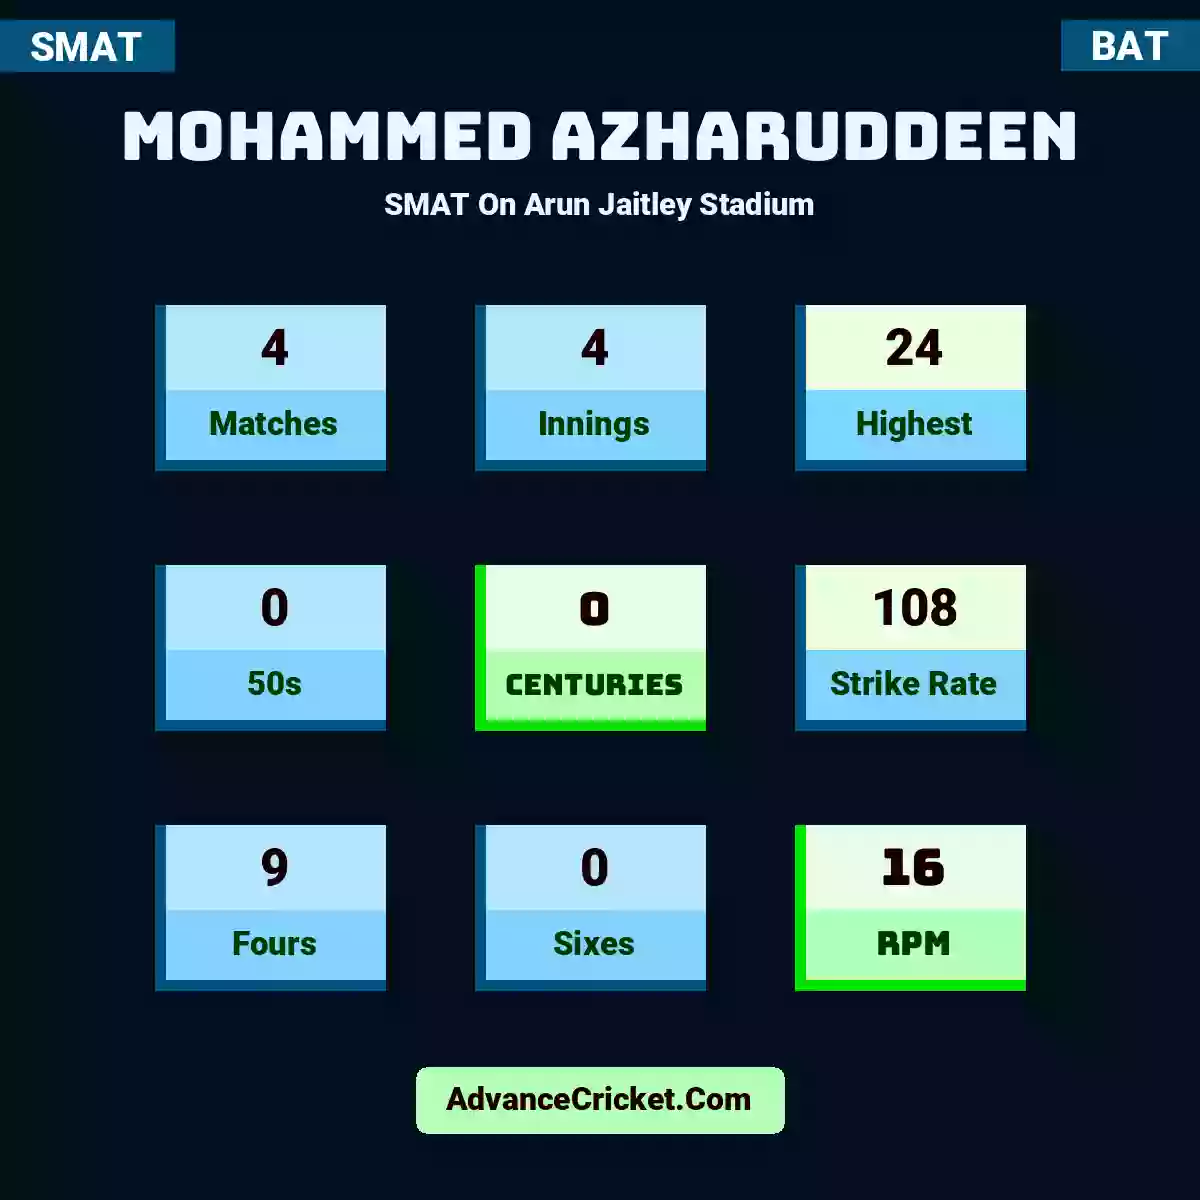 Mohammed Azharuddeen SMAT  On Arun Jaitley Stadium, Mohammed Azharuddeen played 4 matches, scored 24 runs as highest, 0 half-centuries, and 0 centuries, with a strike rate of 108. M.Azharuddeen hit 9 fours and 0 sixes, with an RPM of 16.